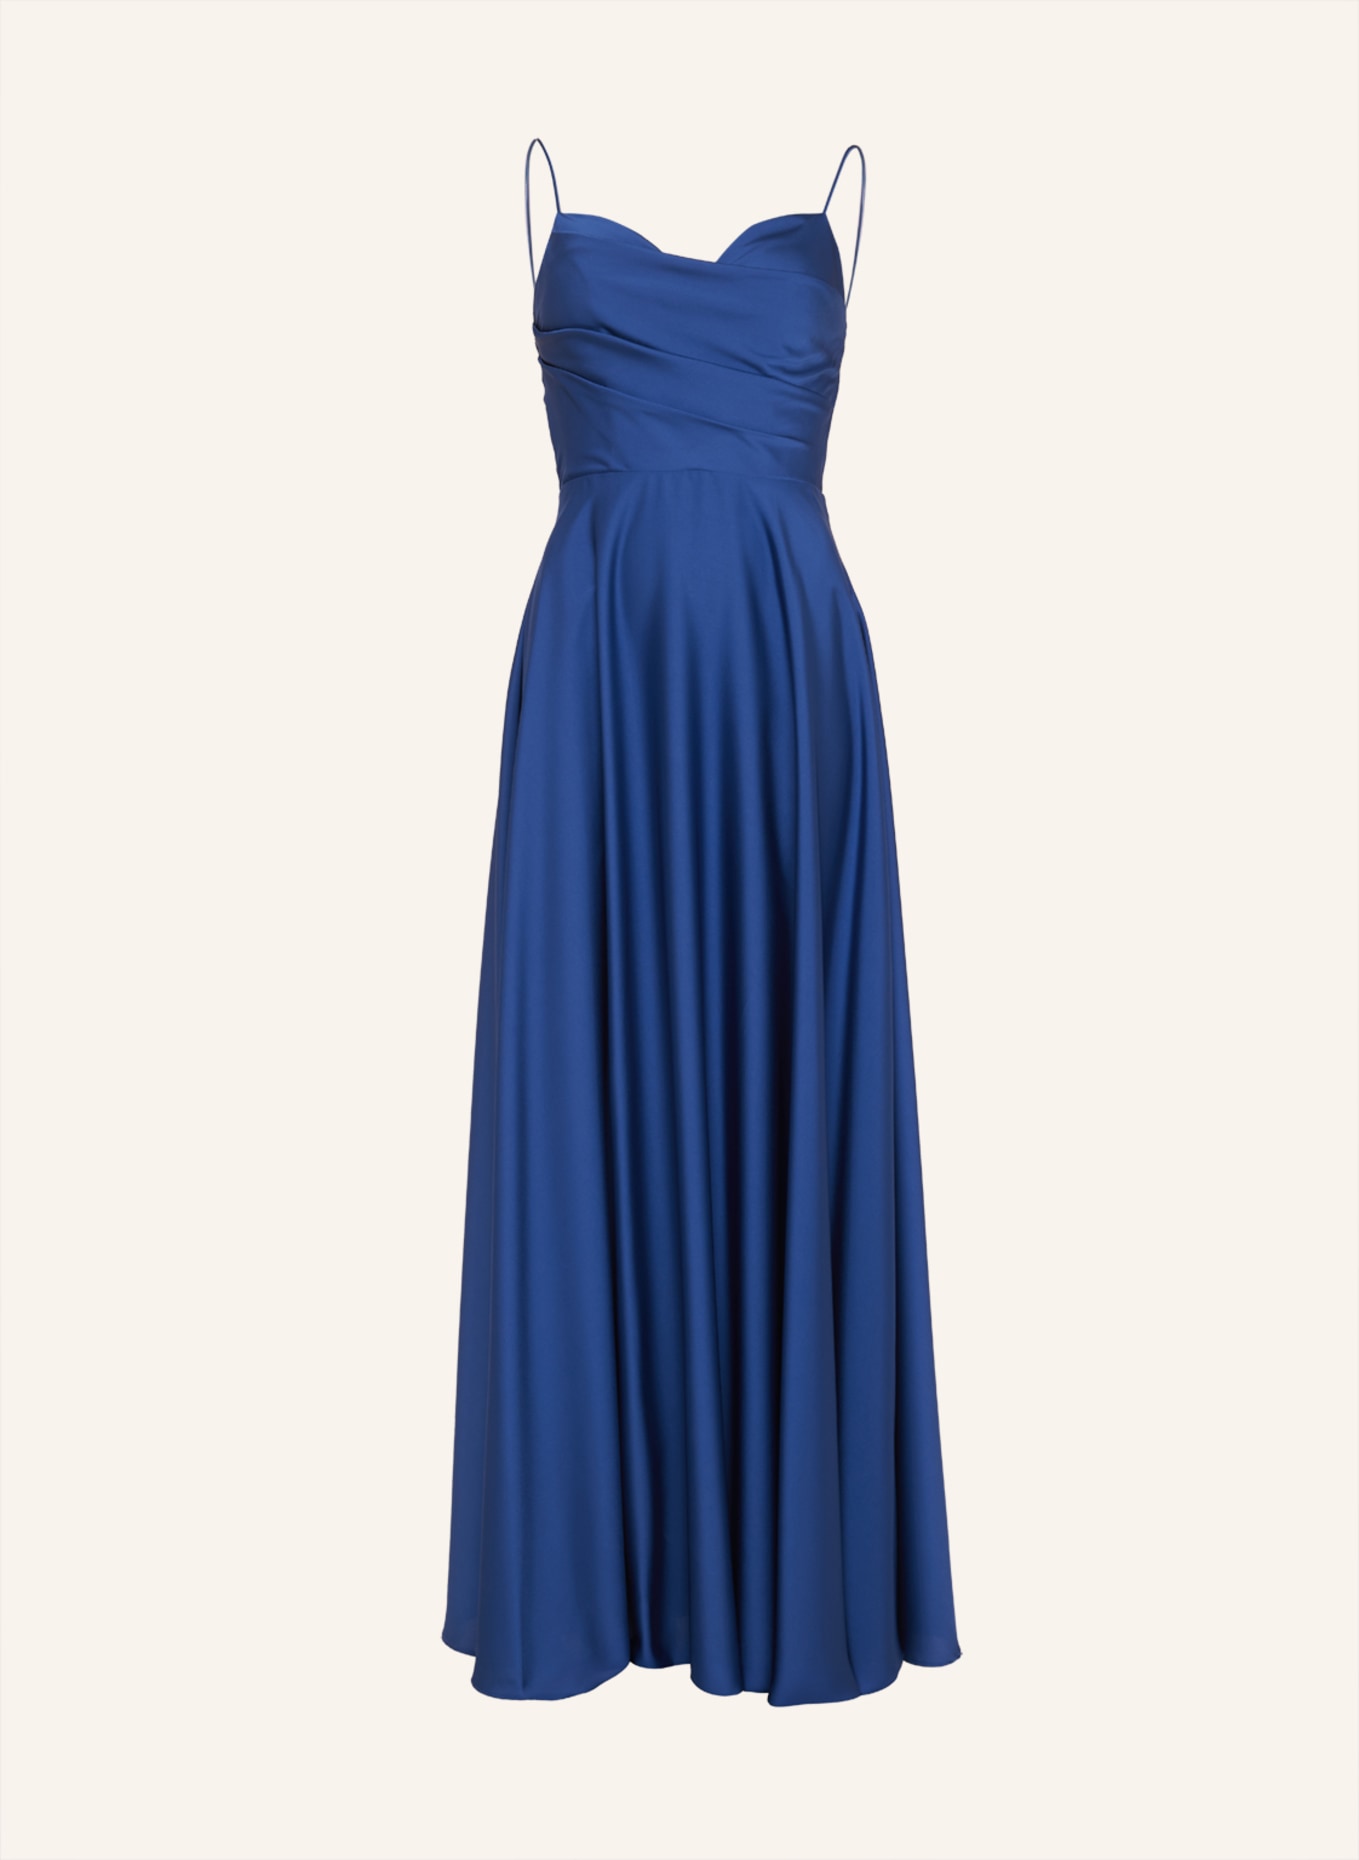 LAONA Abendkleid ABSOLUTELY CLASSY DRESS, Farbe: BLAU (Bild 1)